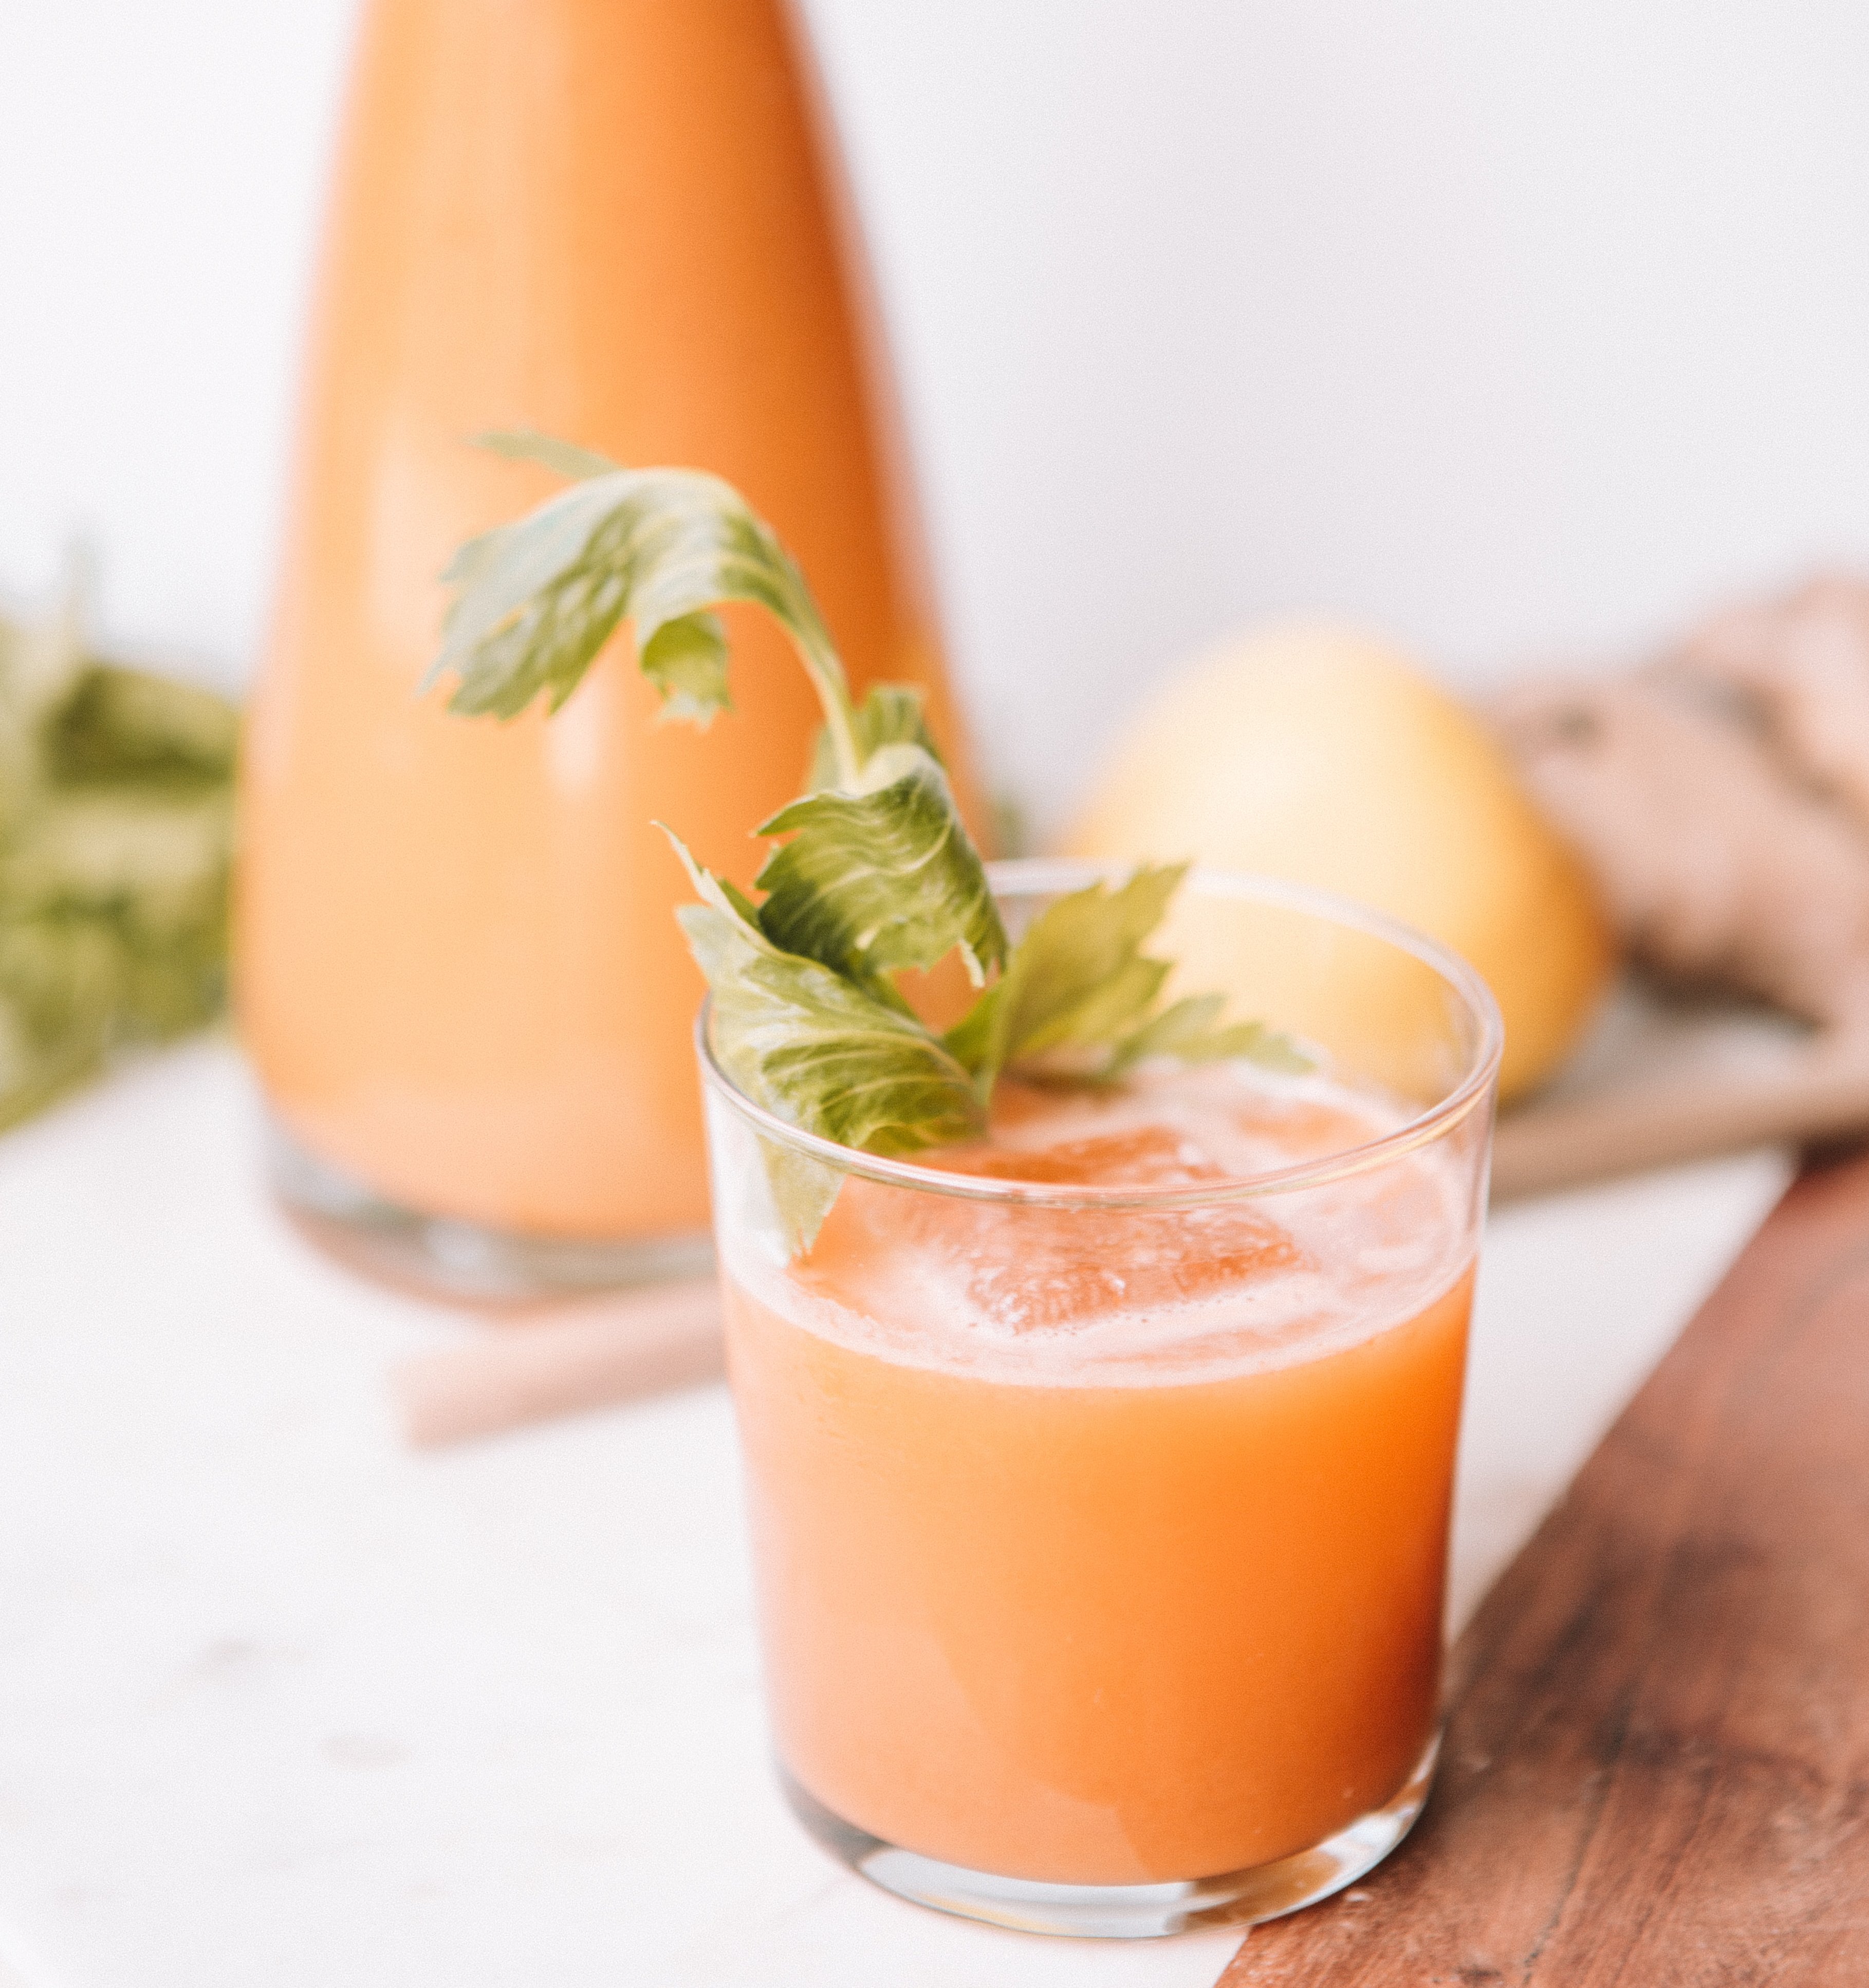 Sis beneficis importants del suc de pastanaga